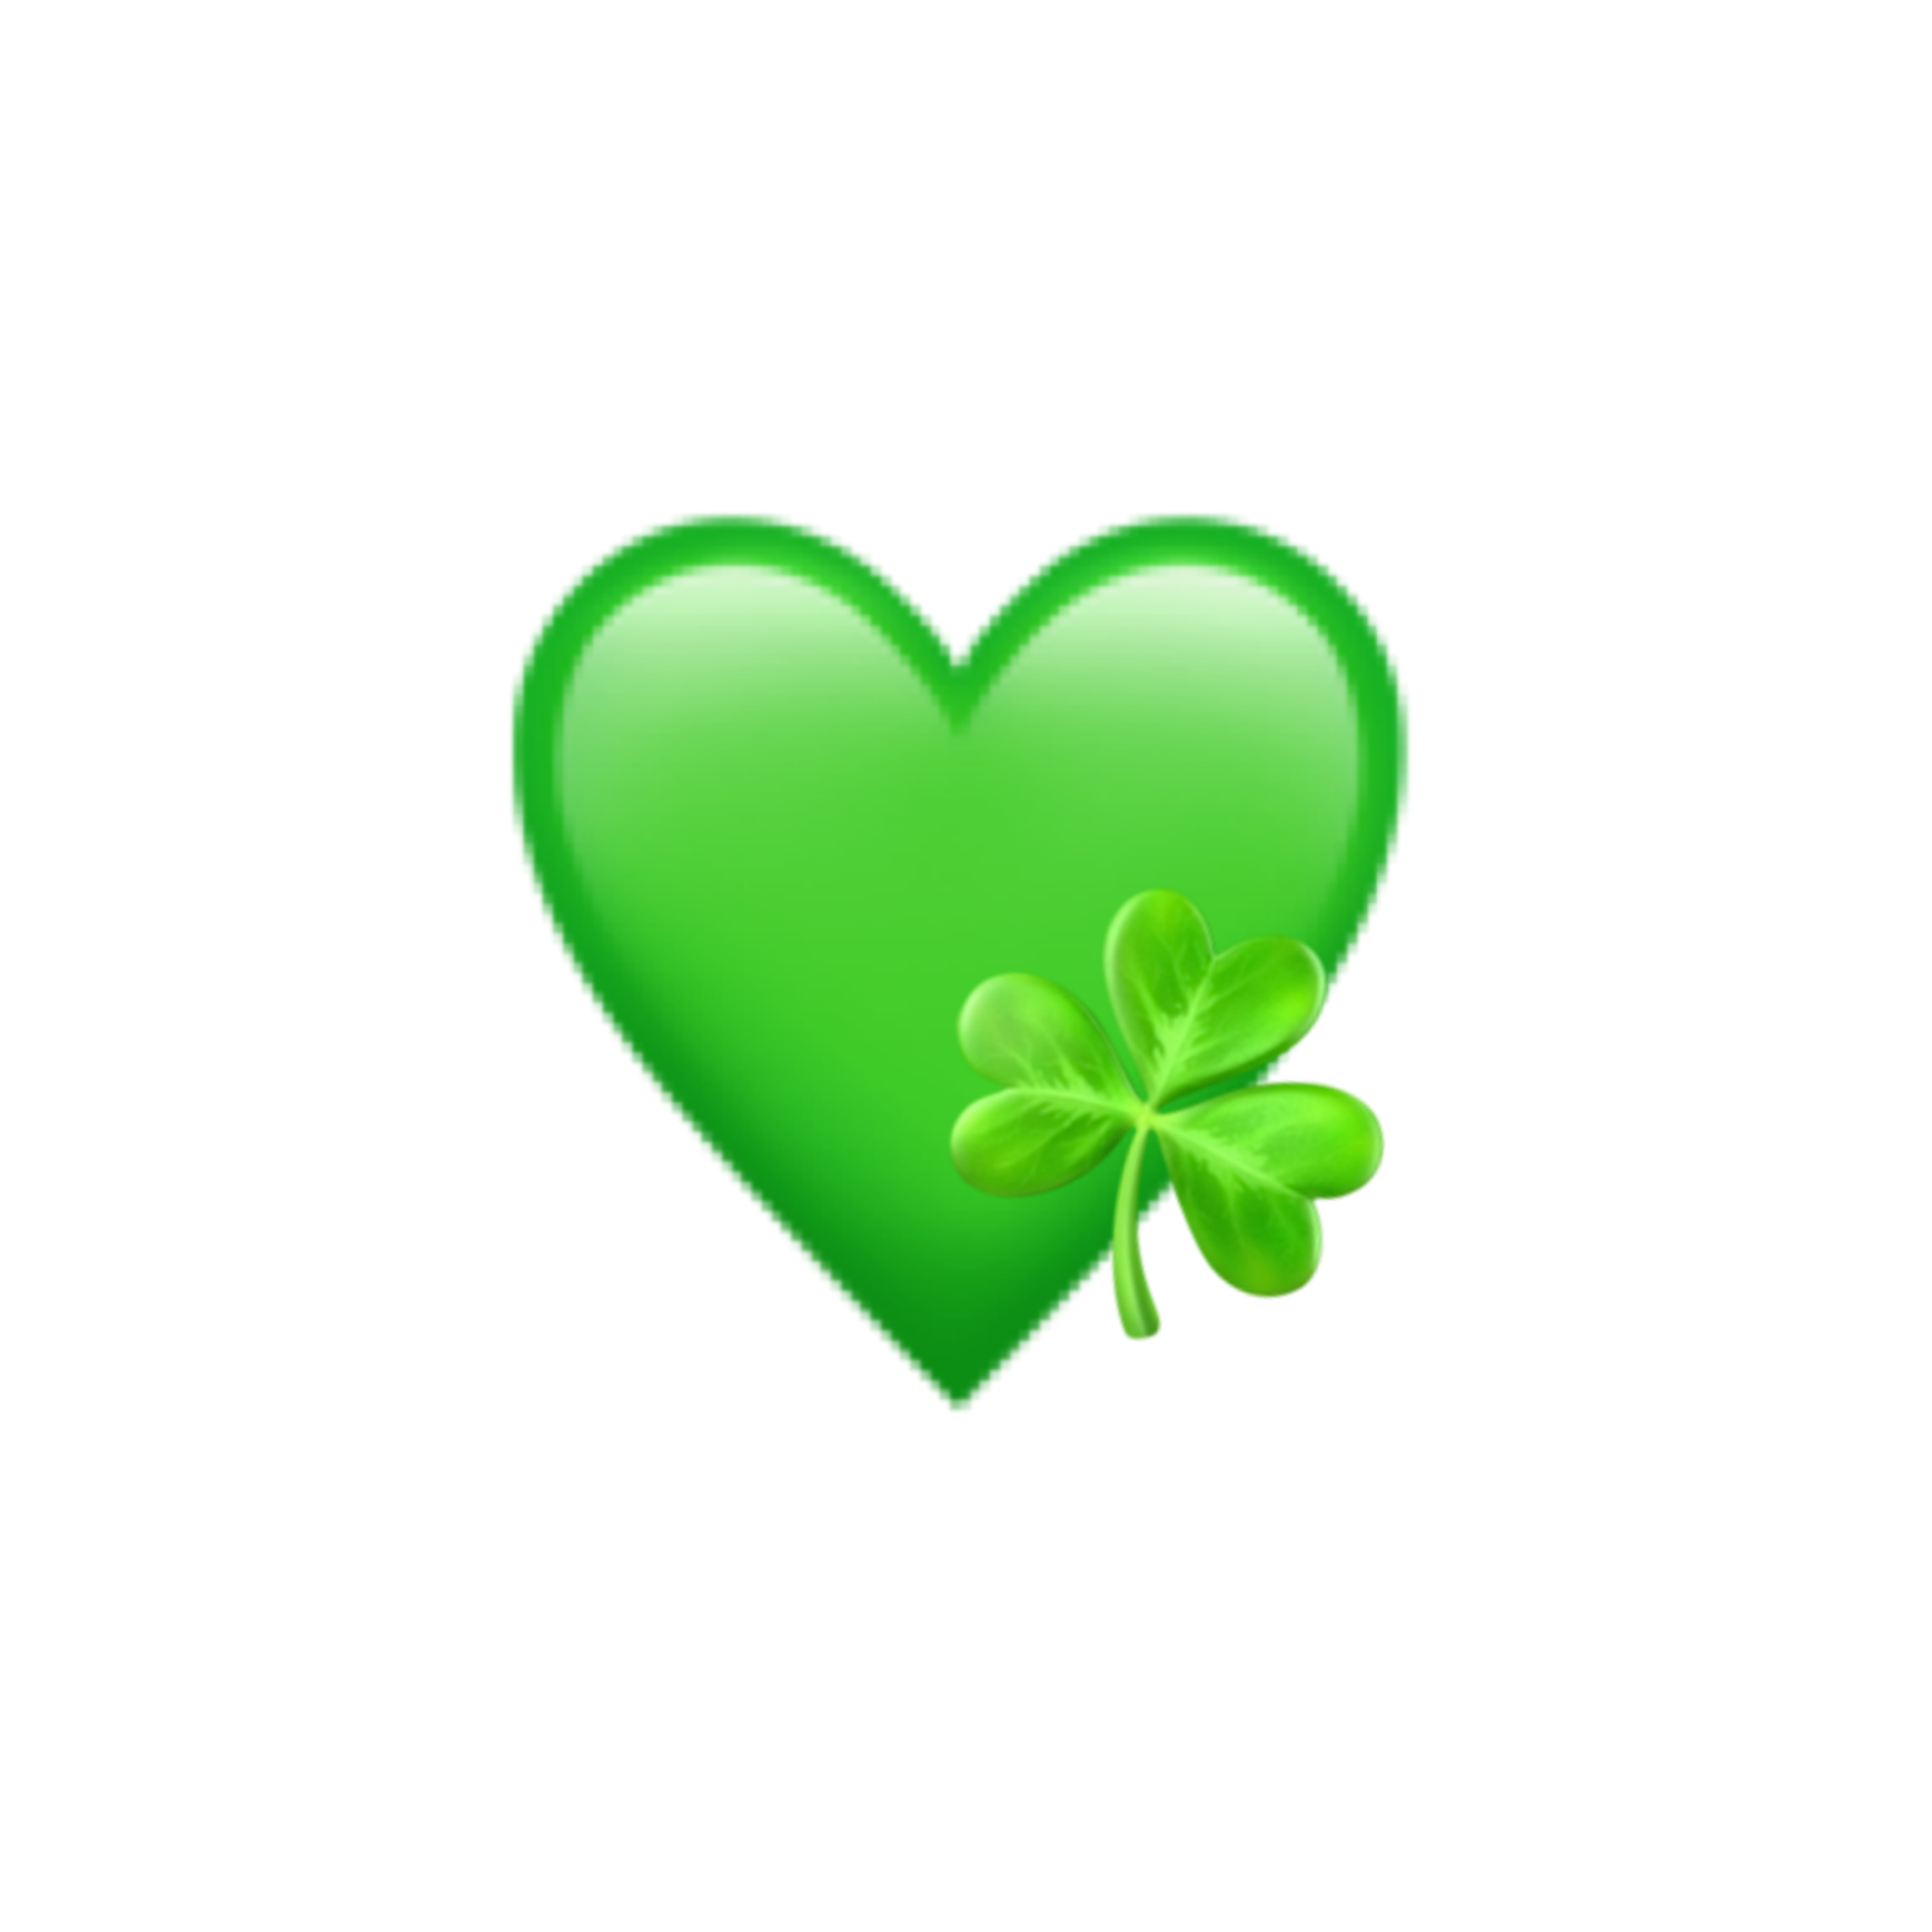 freetoedit green heart plant clover sticker by @knifewounds